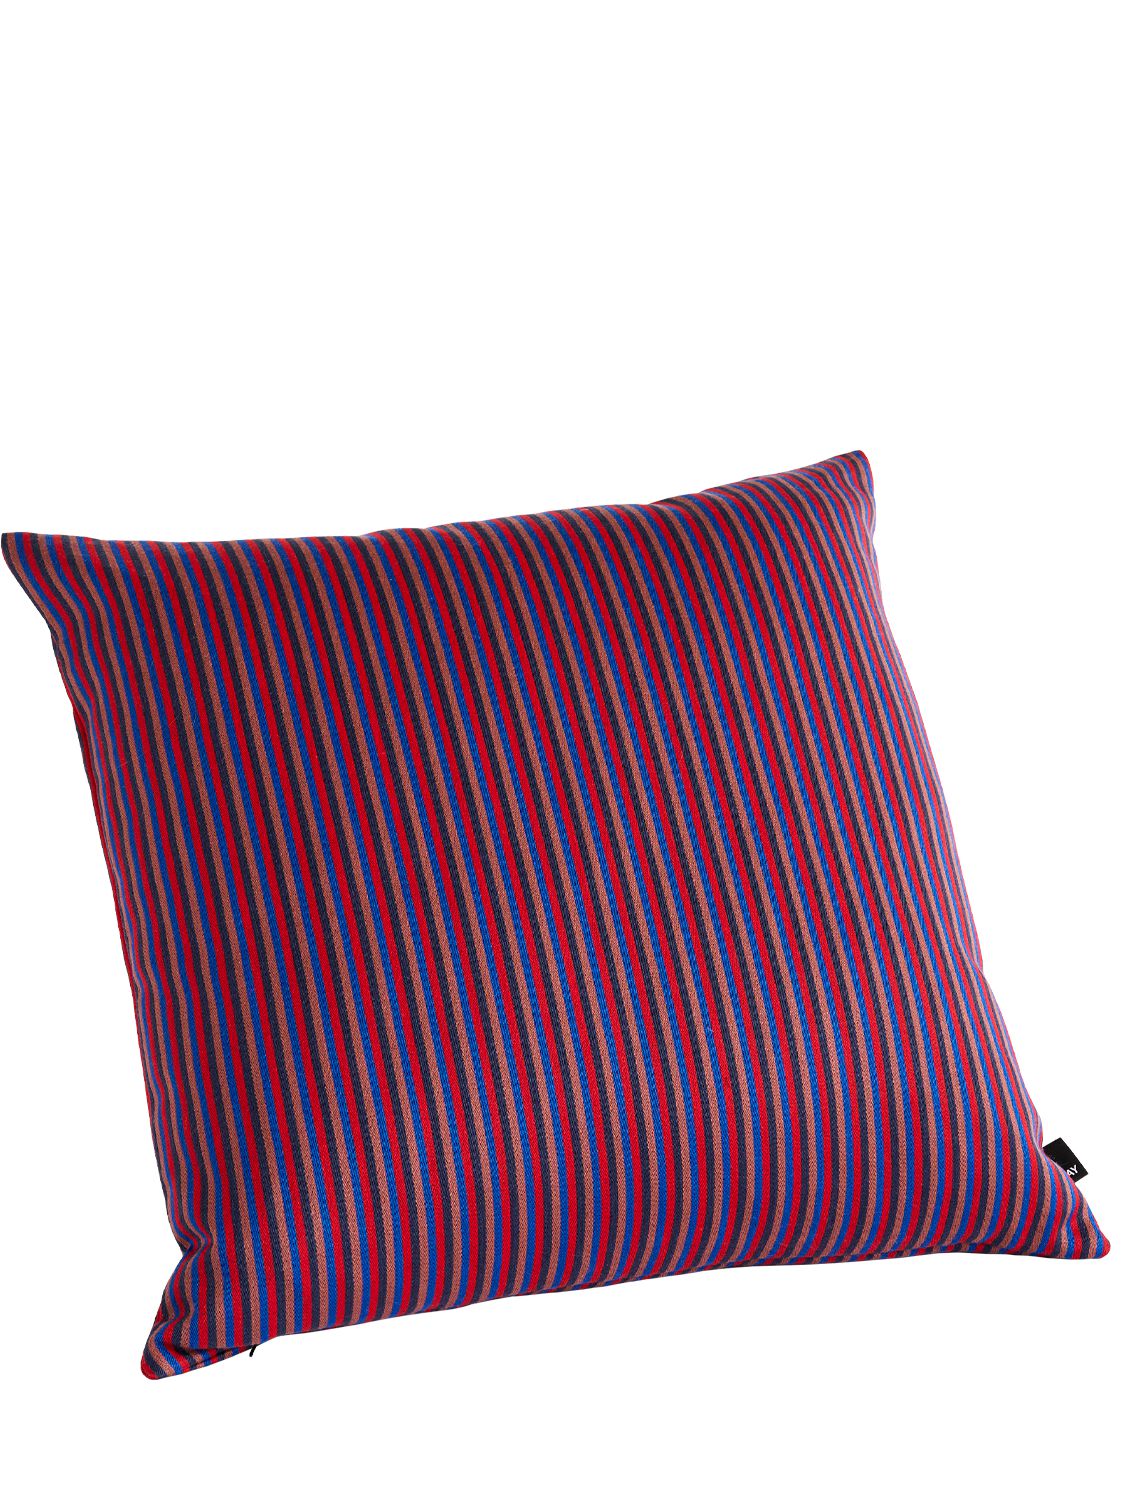 Image of Ribbon Cushion